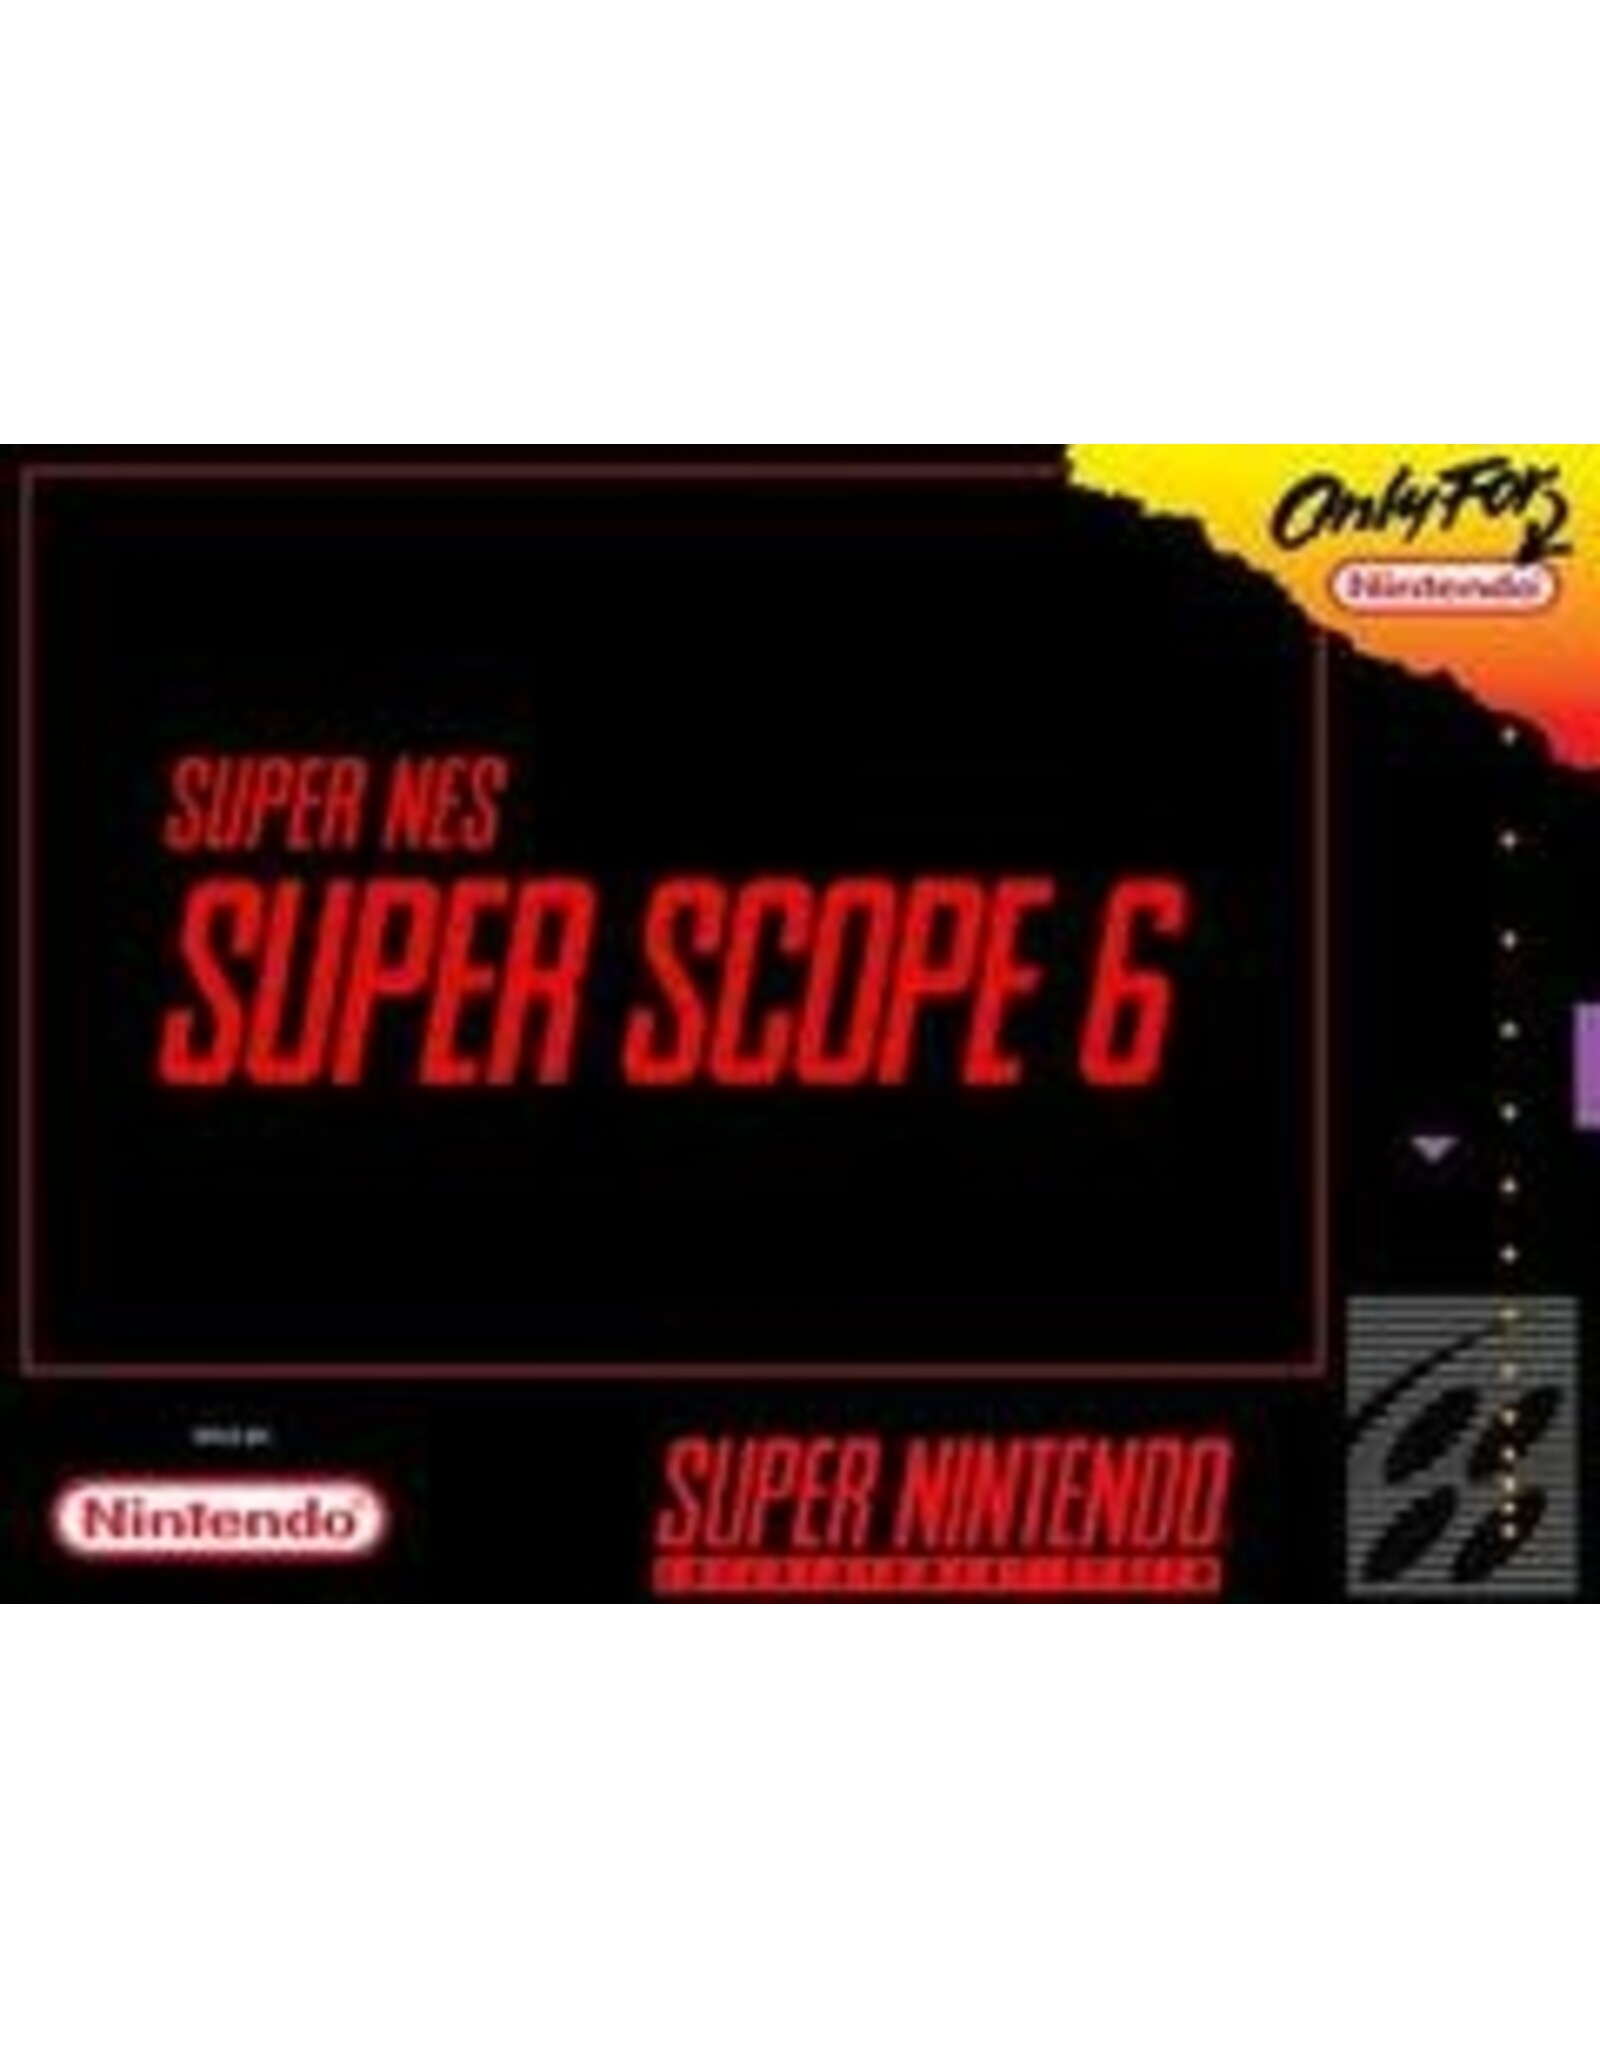 Super Nintendo Super Scope 6 (Used, Cart Only)